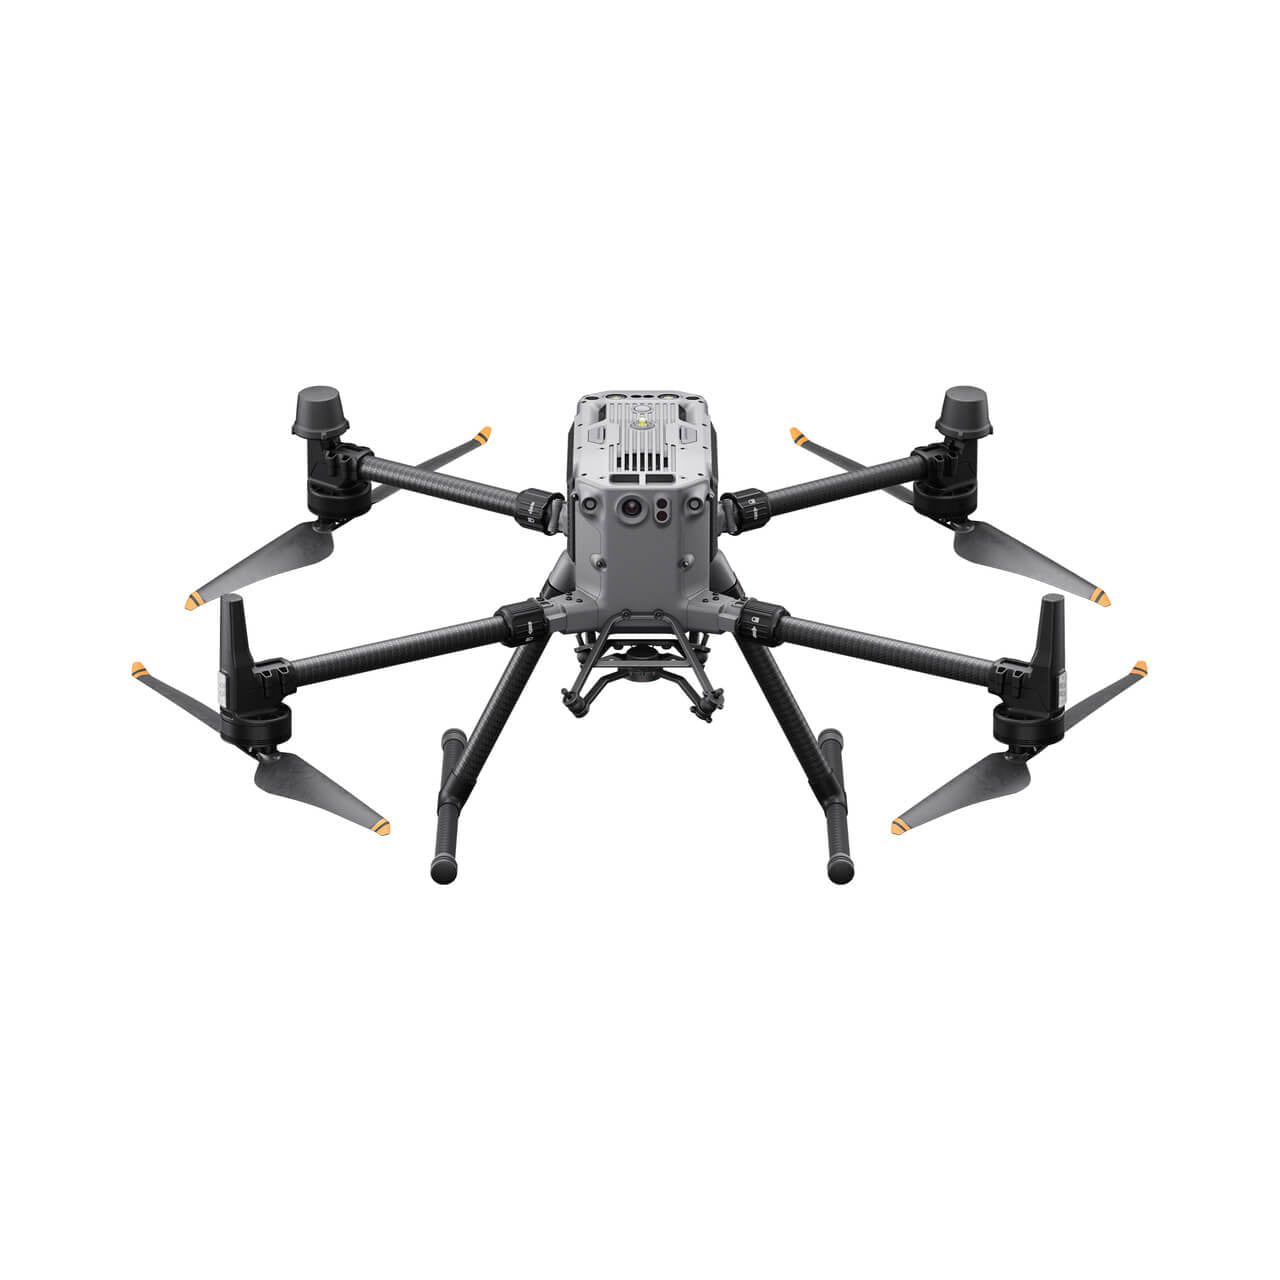 DJI Matrice 350 RTK - Premium Enterprise Drone from DJI - Just $10209! Shop now at Eagleview Drones